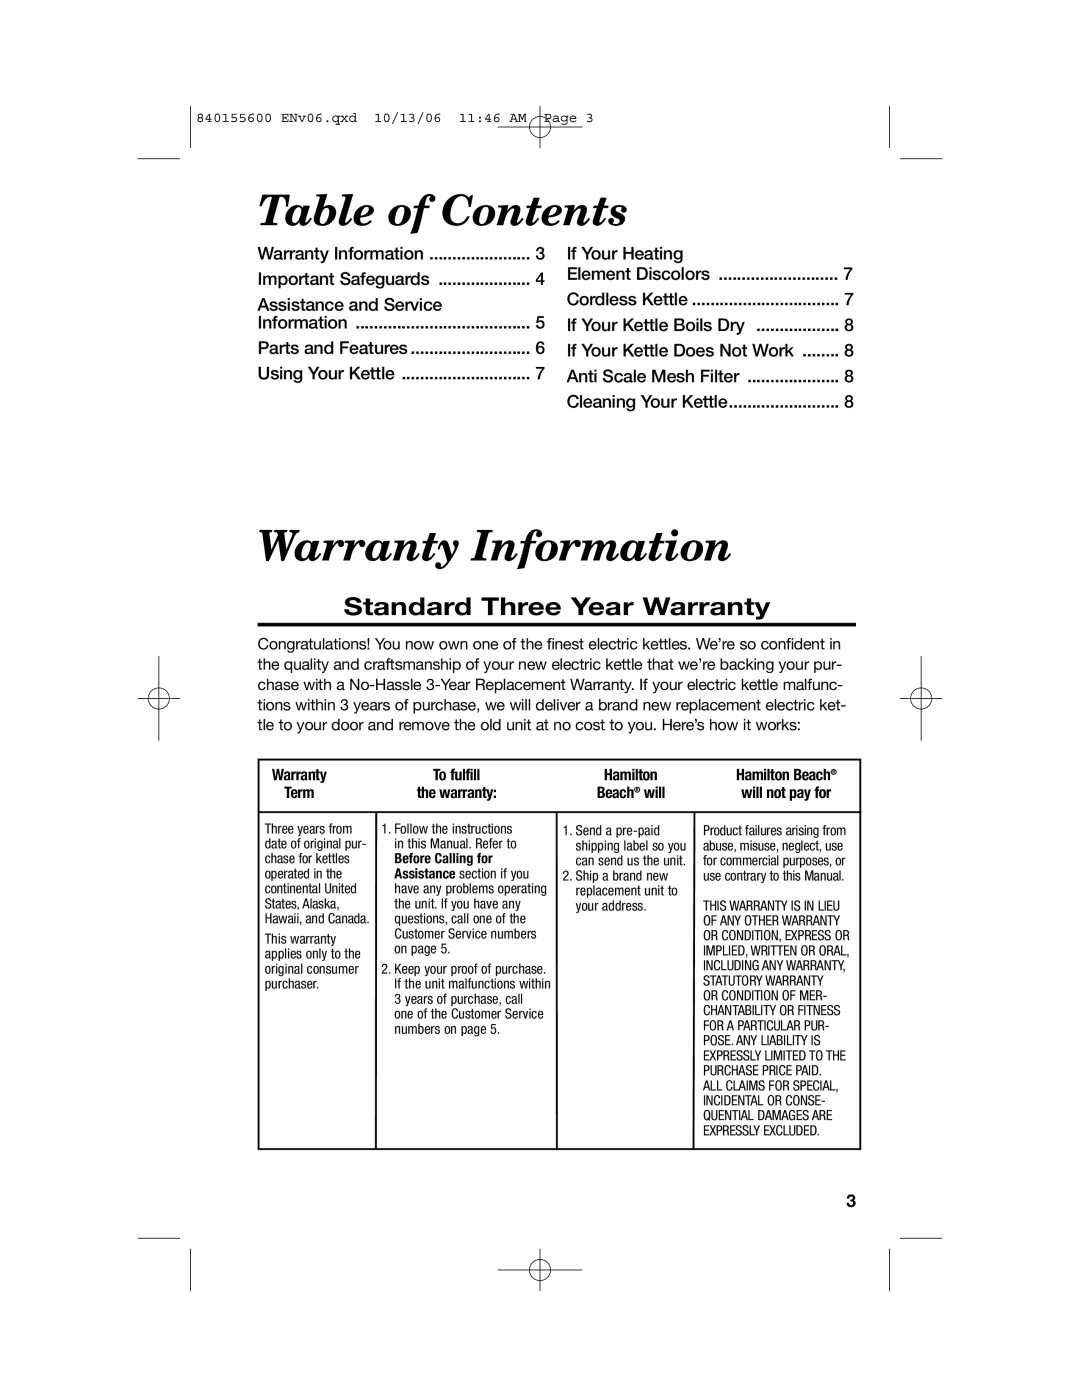 Hamilton Beach 40990 manual Table of Contents, Warranty Information, Standard Three Year Warranty 